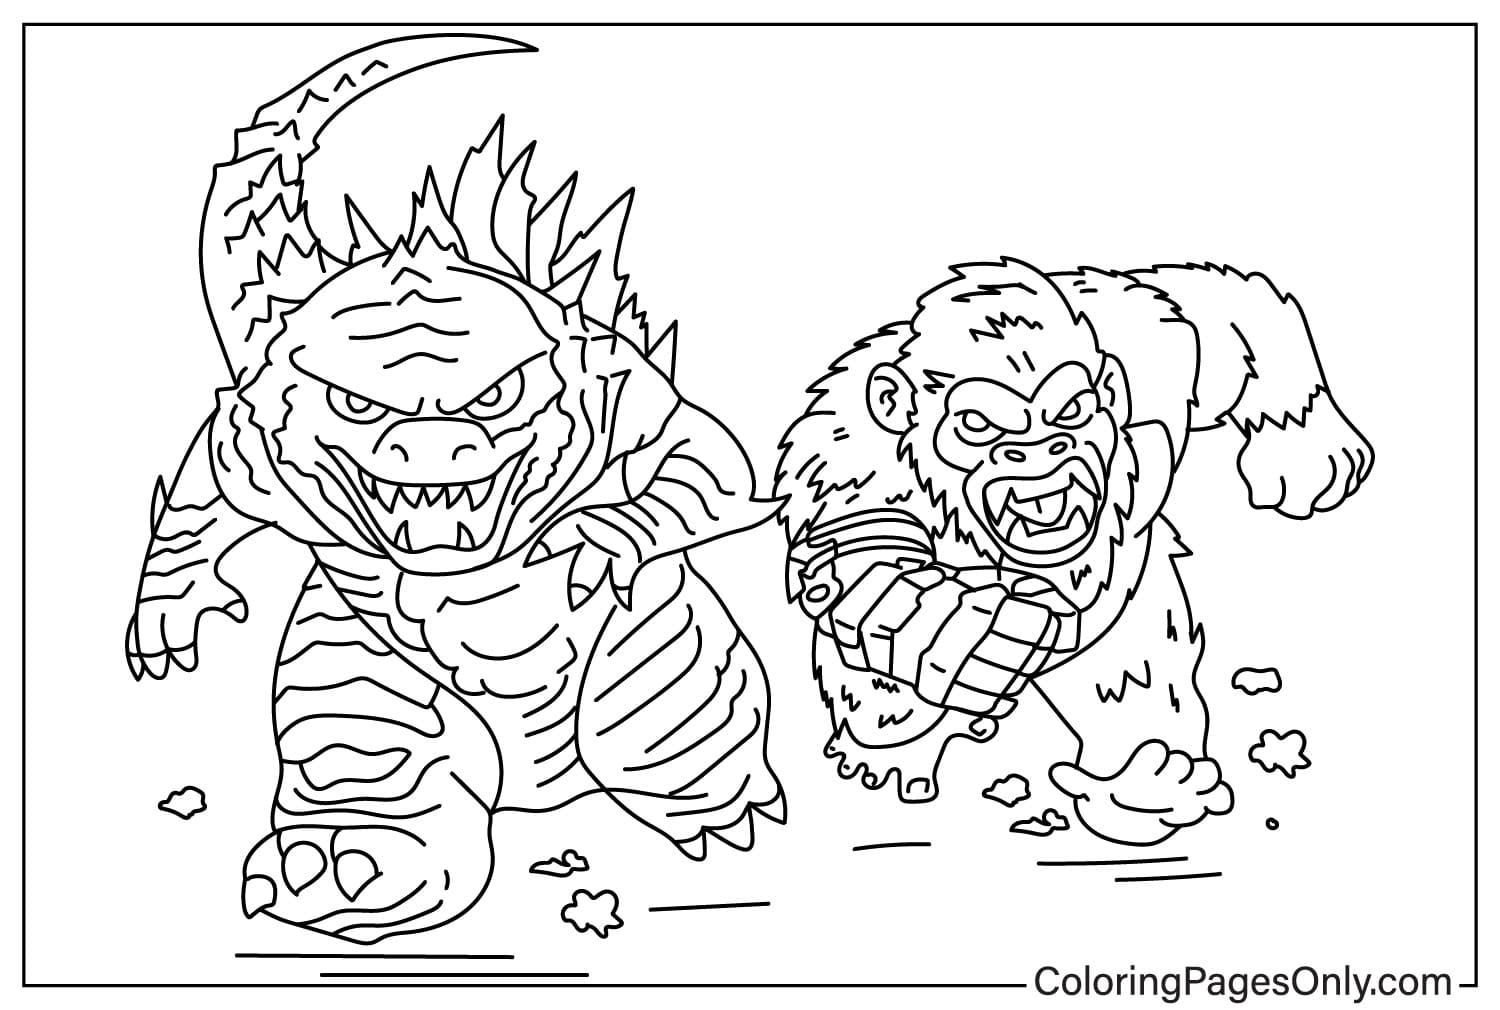 Godzilla x Kong - Le Nouvel Empire Coloriage pour les enfants de Godzilla x Kong : Le Nouvel Empire